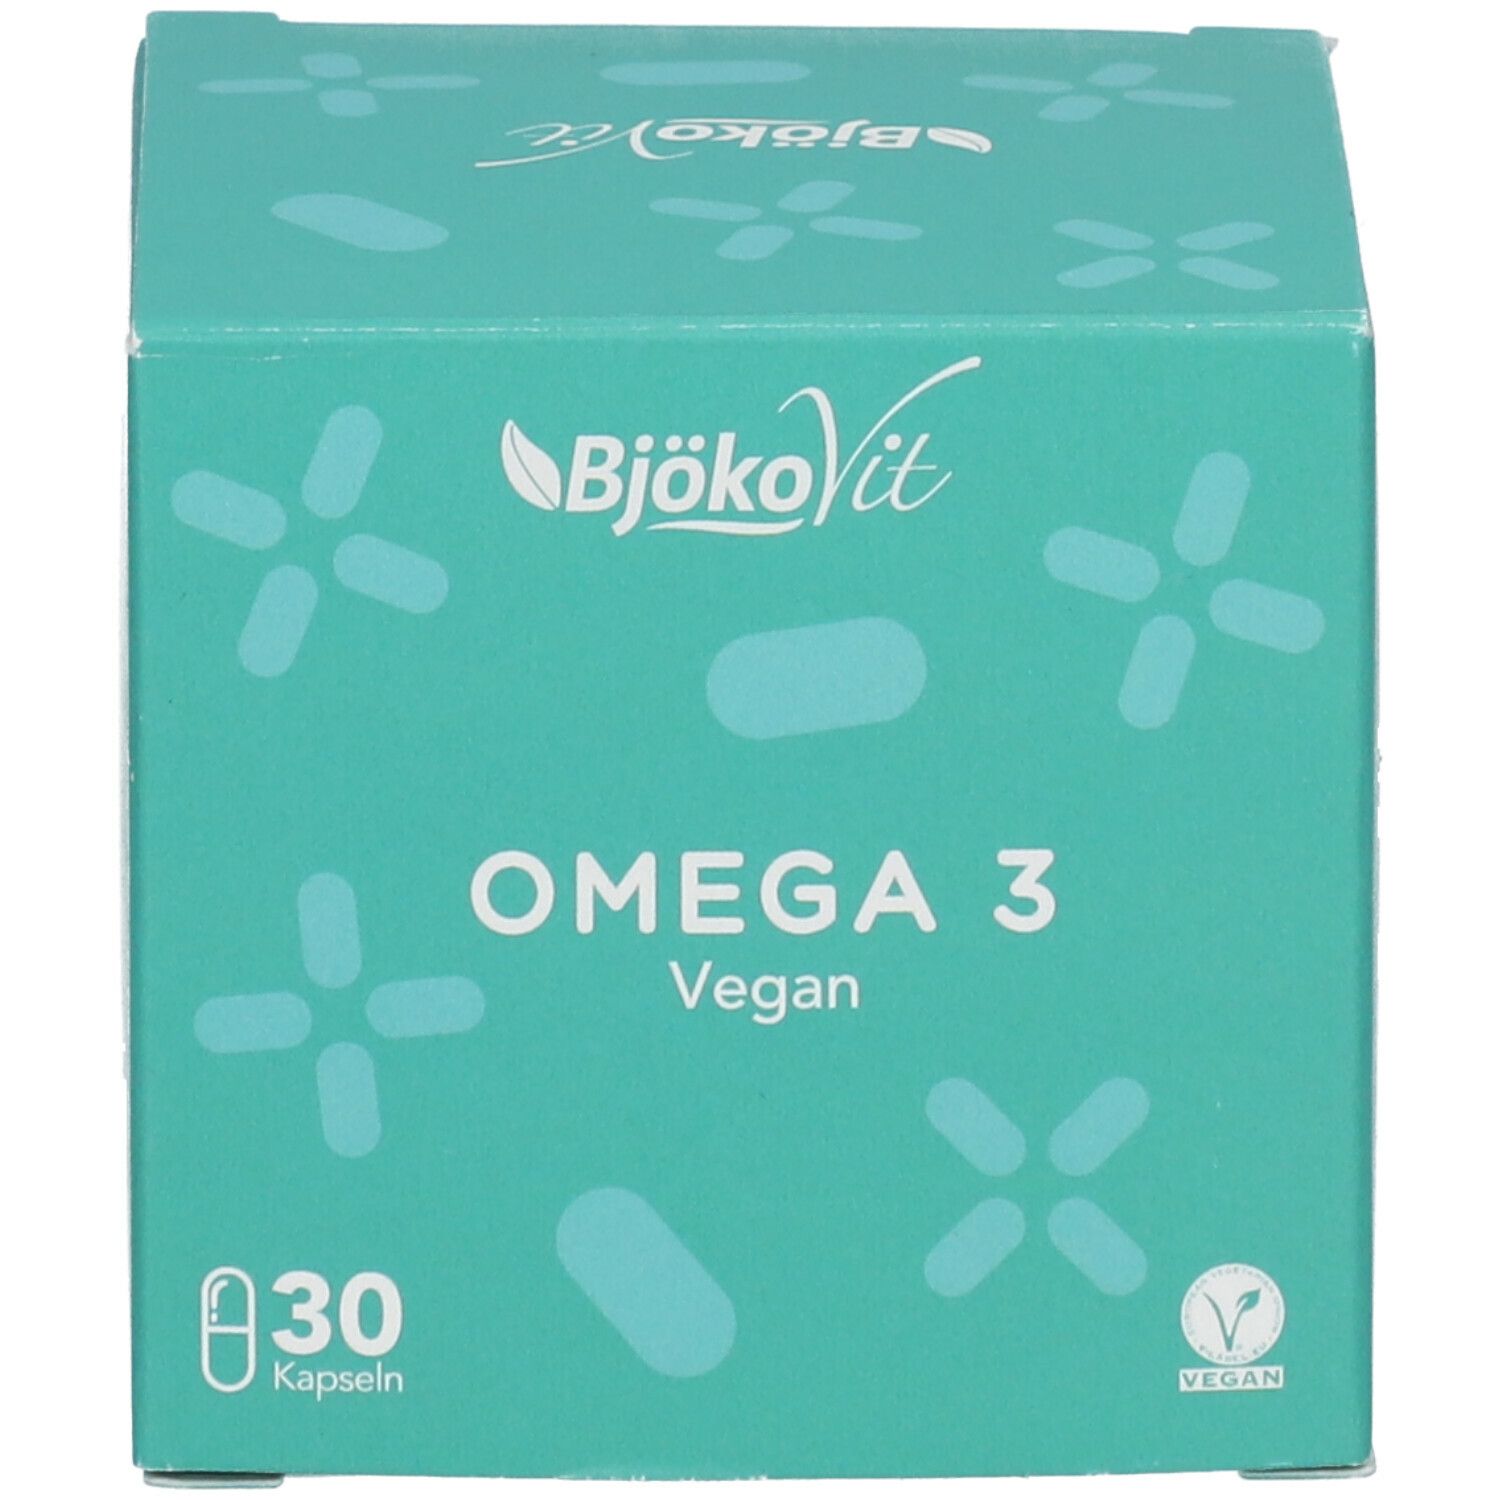 BjökoVit Omega-3